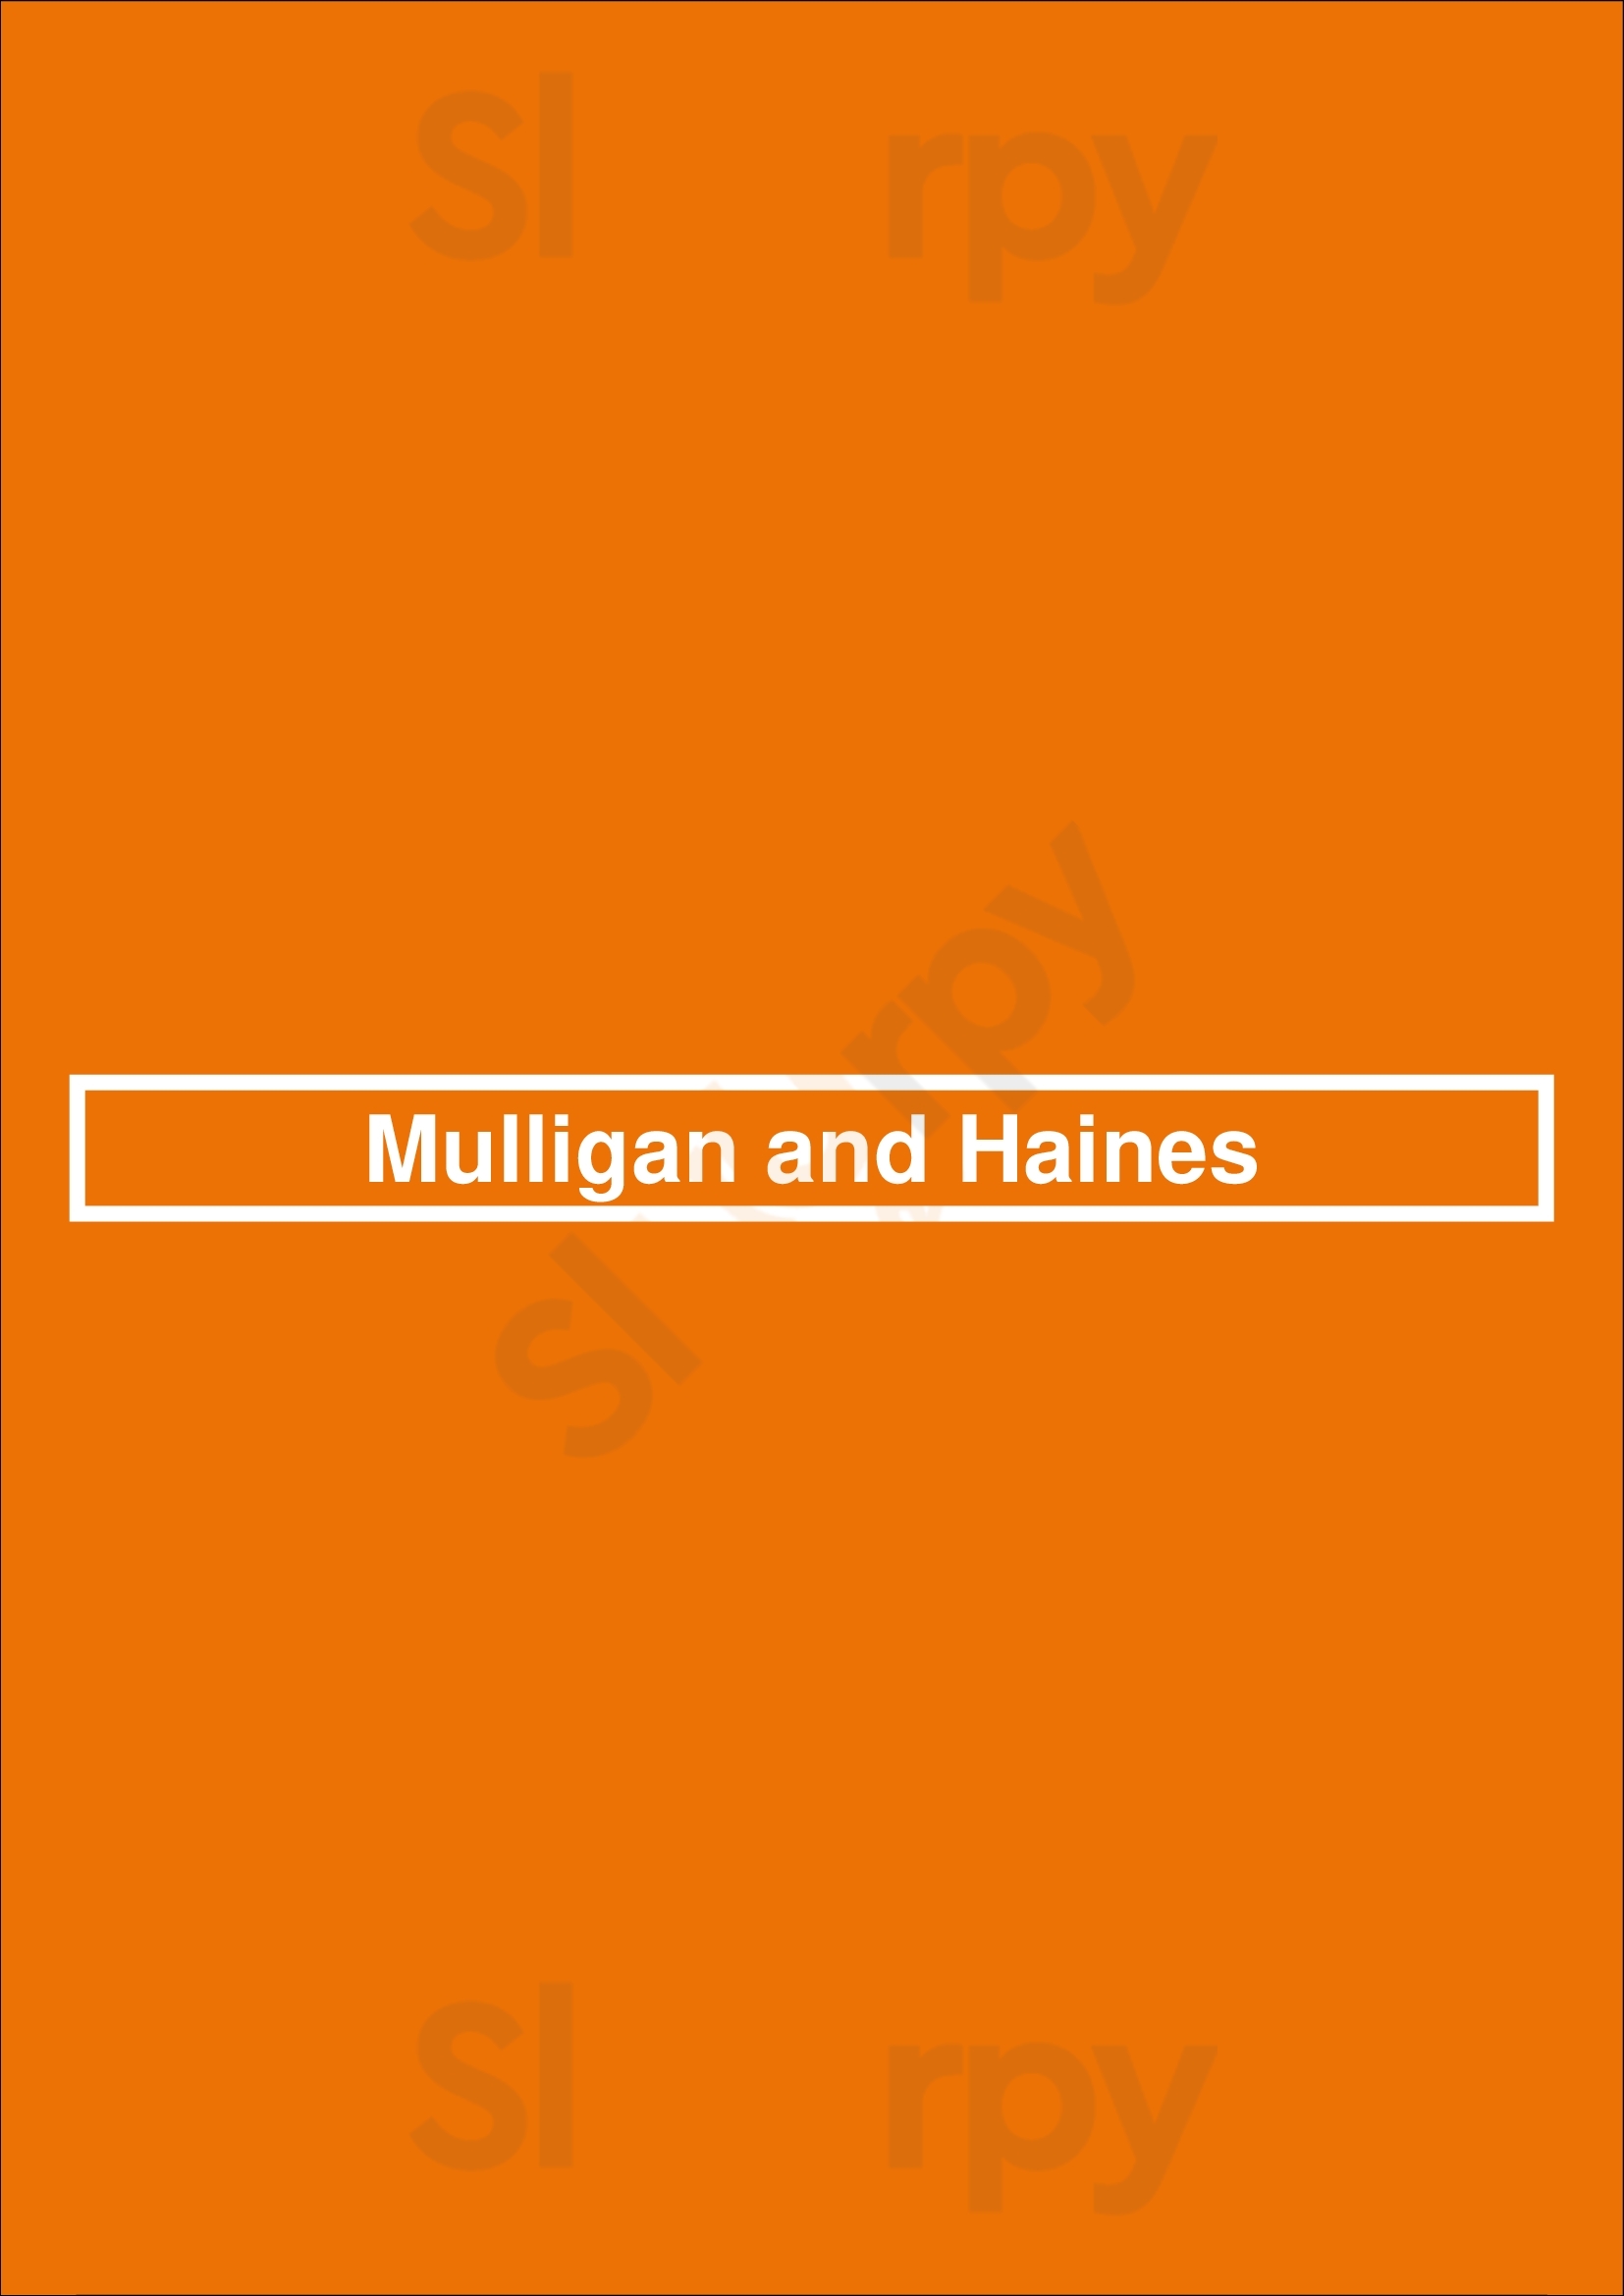 Mulligan And Haines Dublin Menu - 1